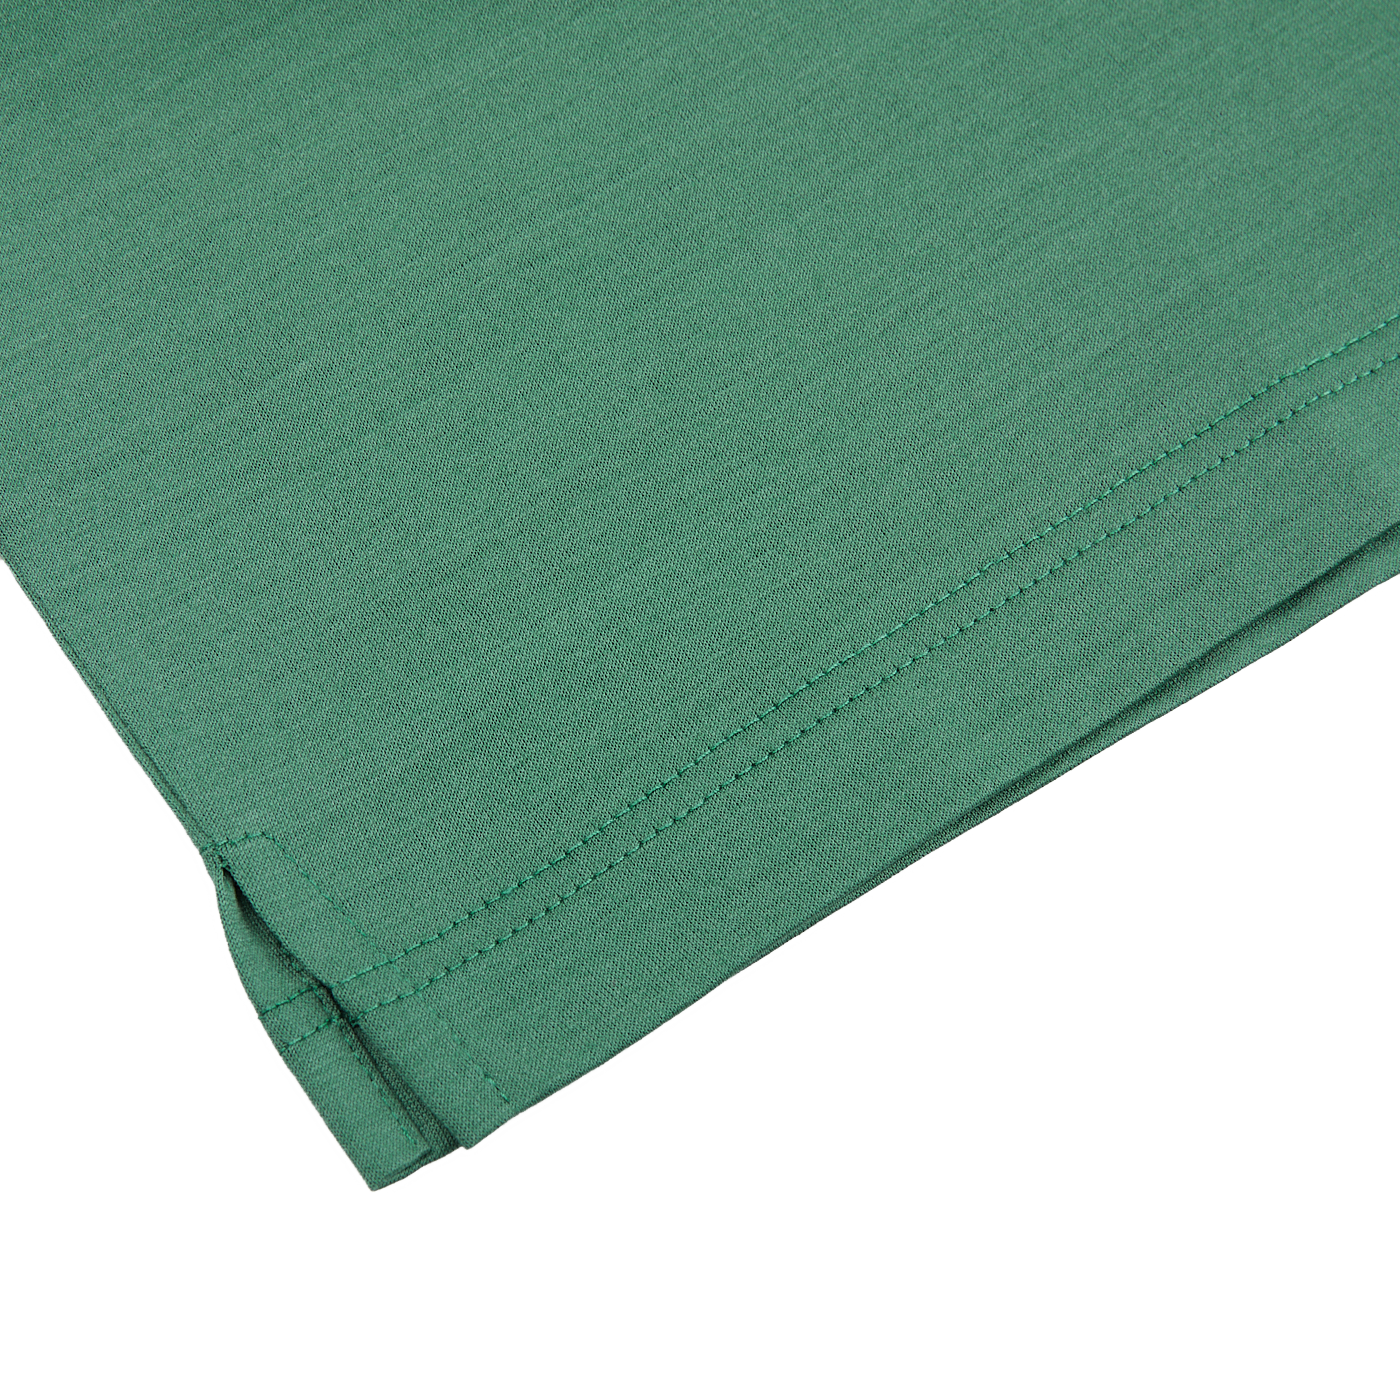 A Gran Sasso knitted fabric in Aqua Green Cotton Filo Scozia Polo Shirt with black lines.